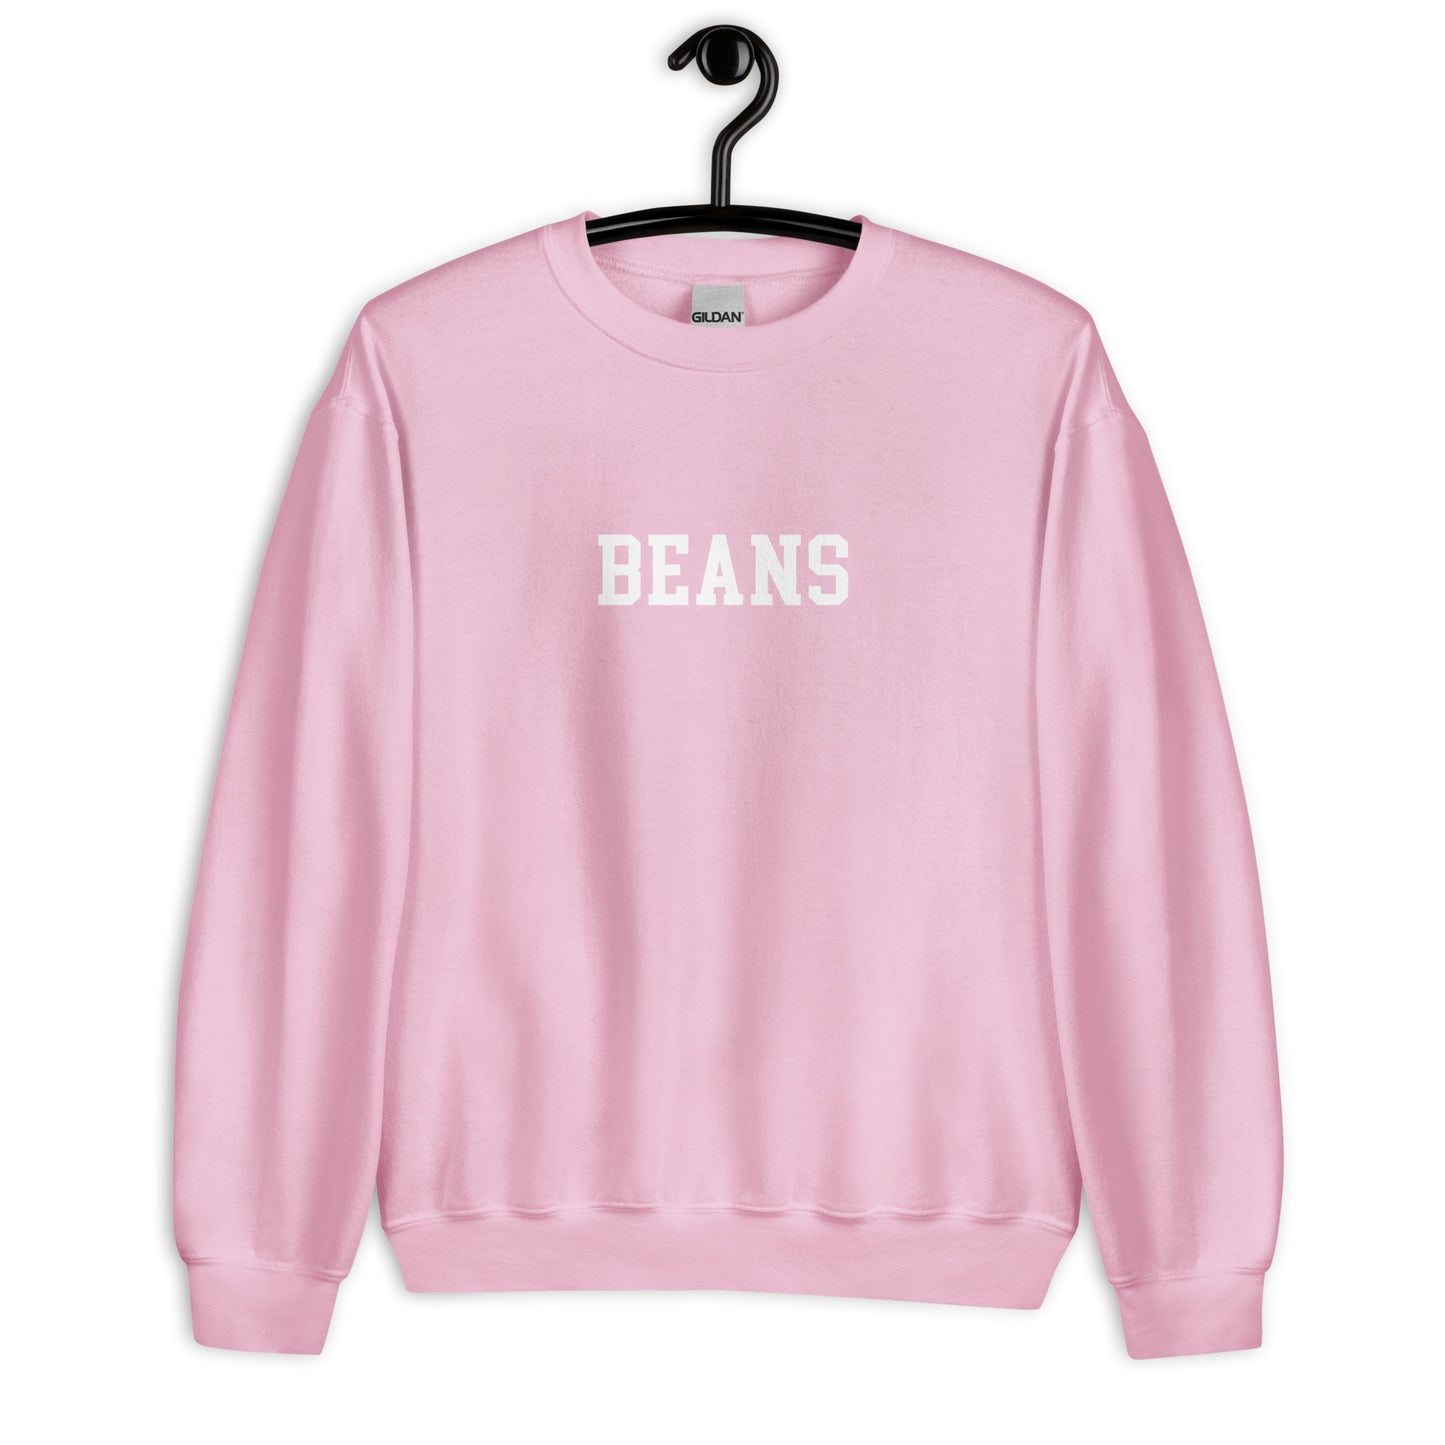 Beans Sweatshirt - Straight Font